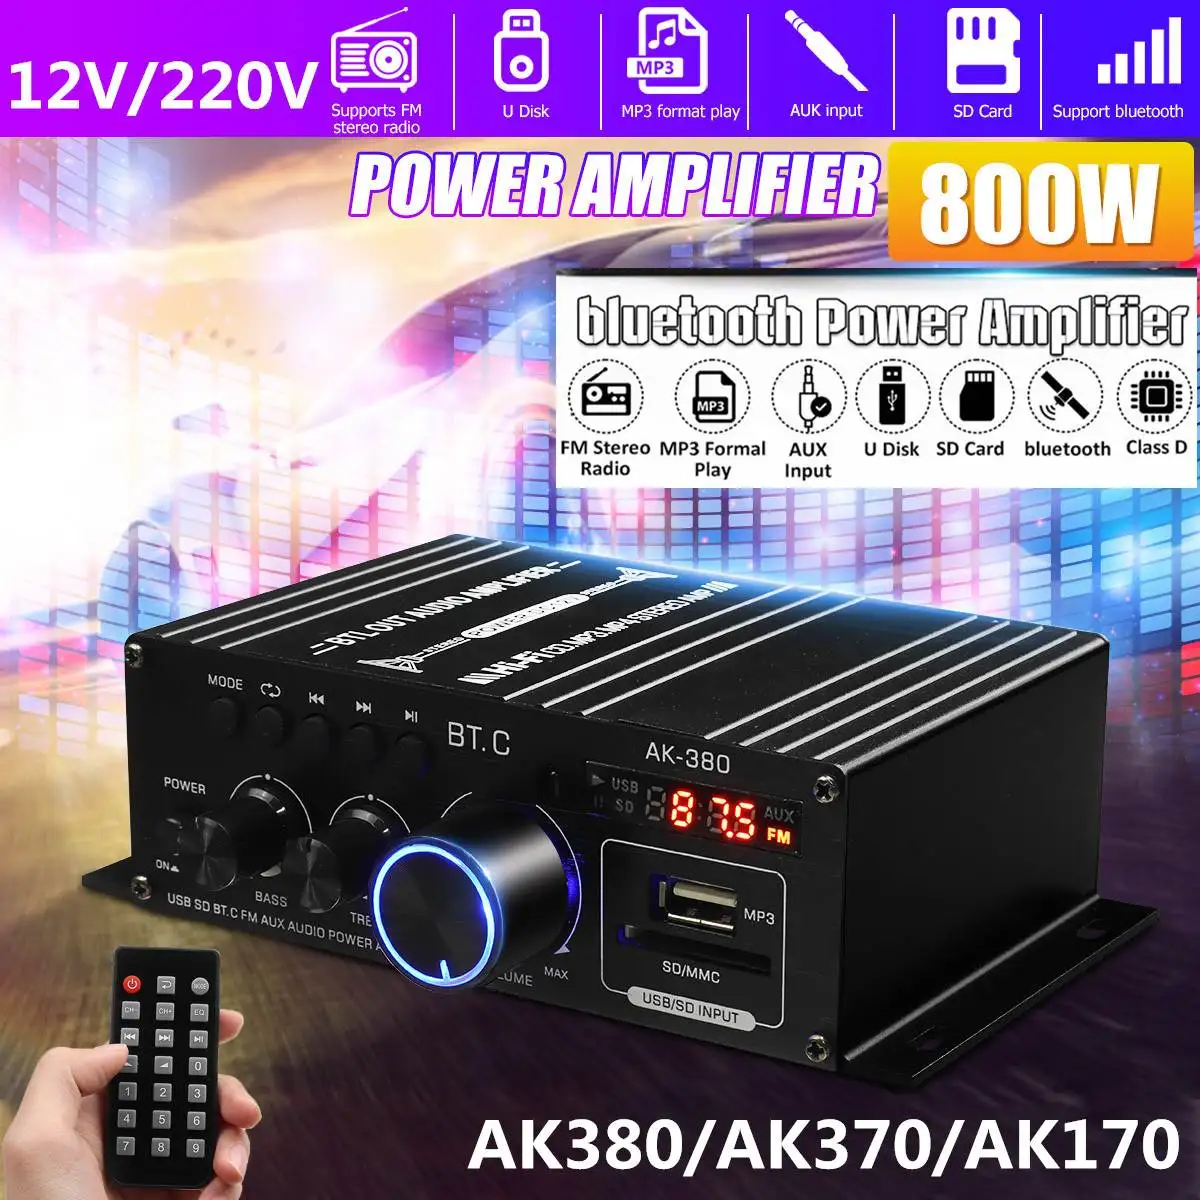 

AK380/AK370/AK170 800W Power Amplifier Audio Karaoke Home Theater Amplifier 2 Channel bluetooth Class D Amplifier USB SD AUX